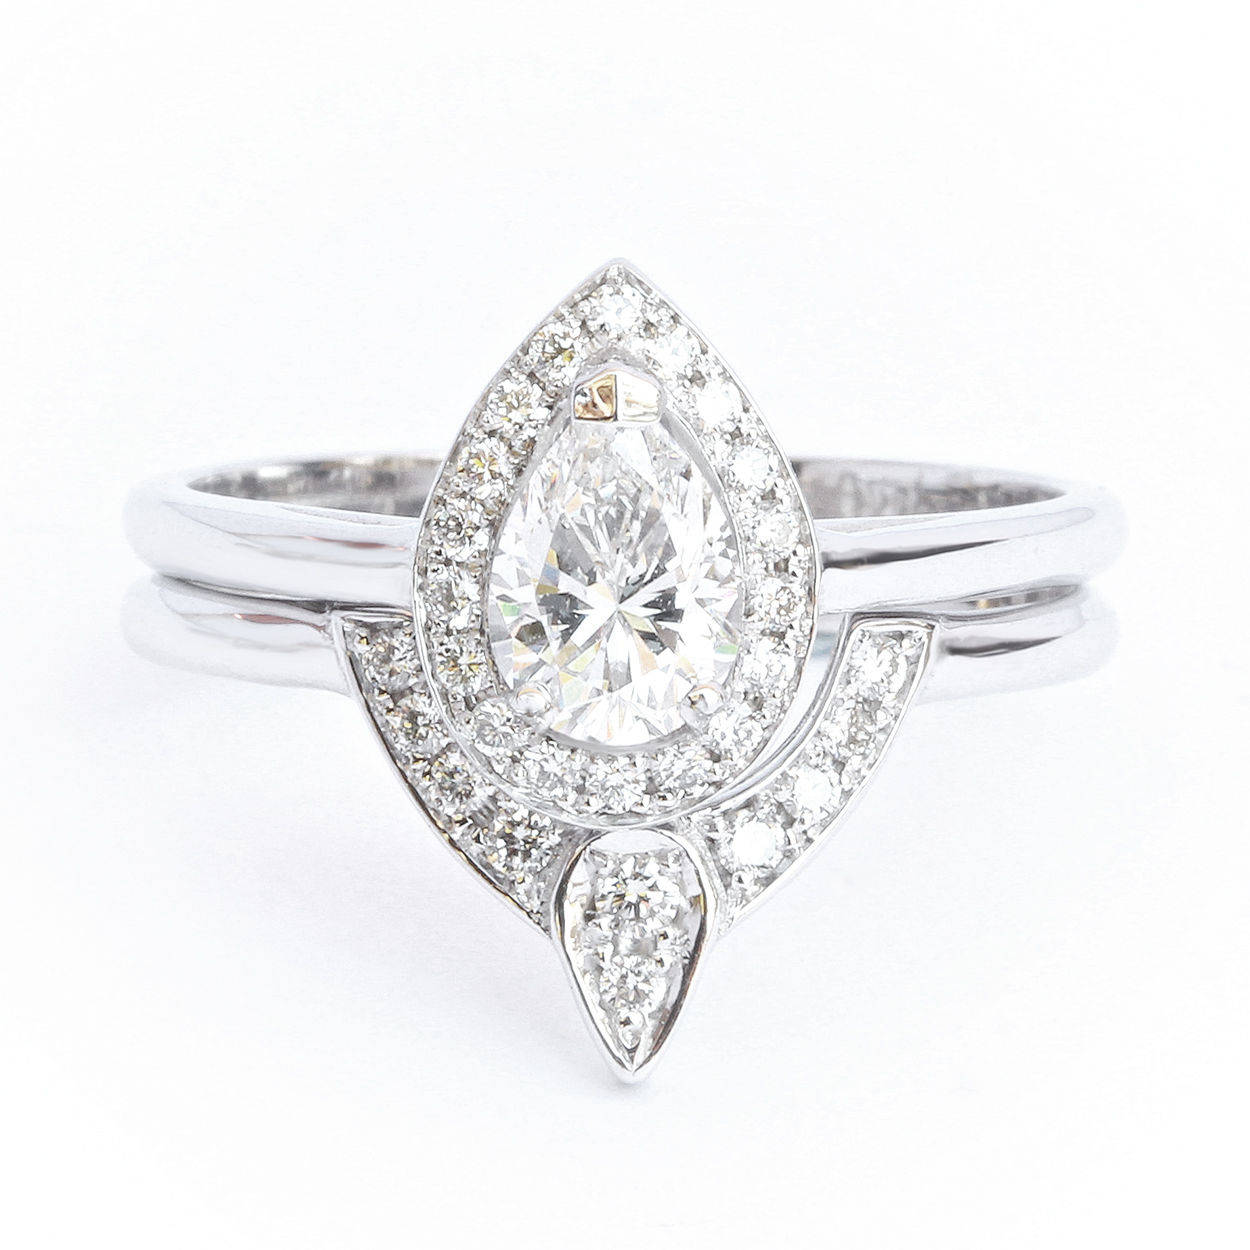 Pear Diamond Halo Wedding Ring Set - The 3rd Eye. Center 0.5 carat. TDW  0.7 carat - sillyshinydiamonds